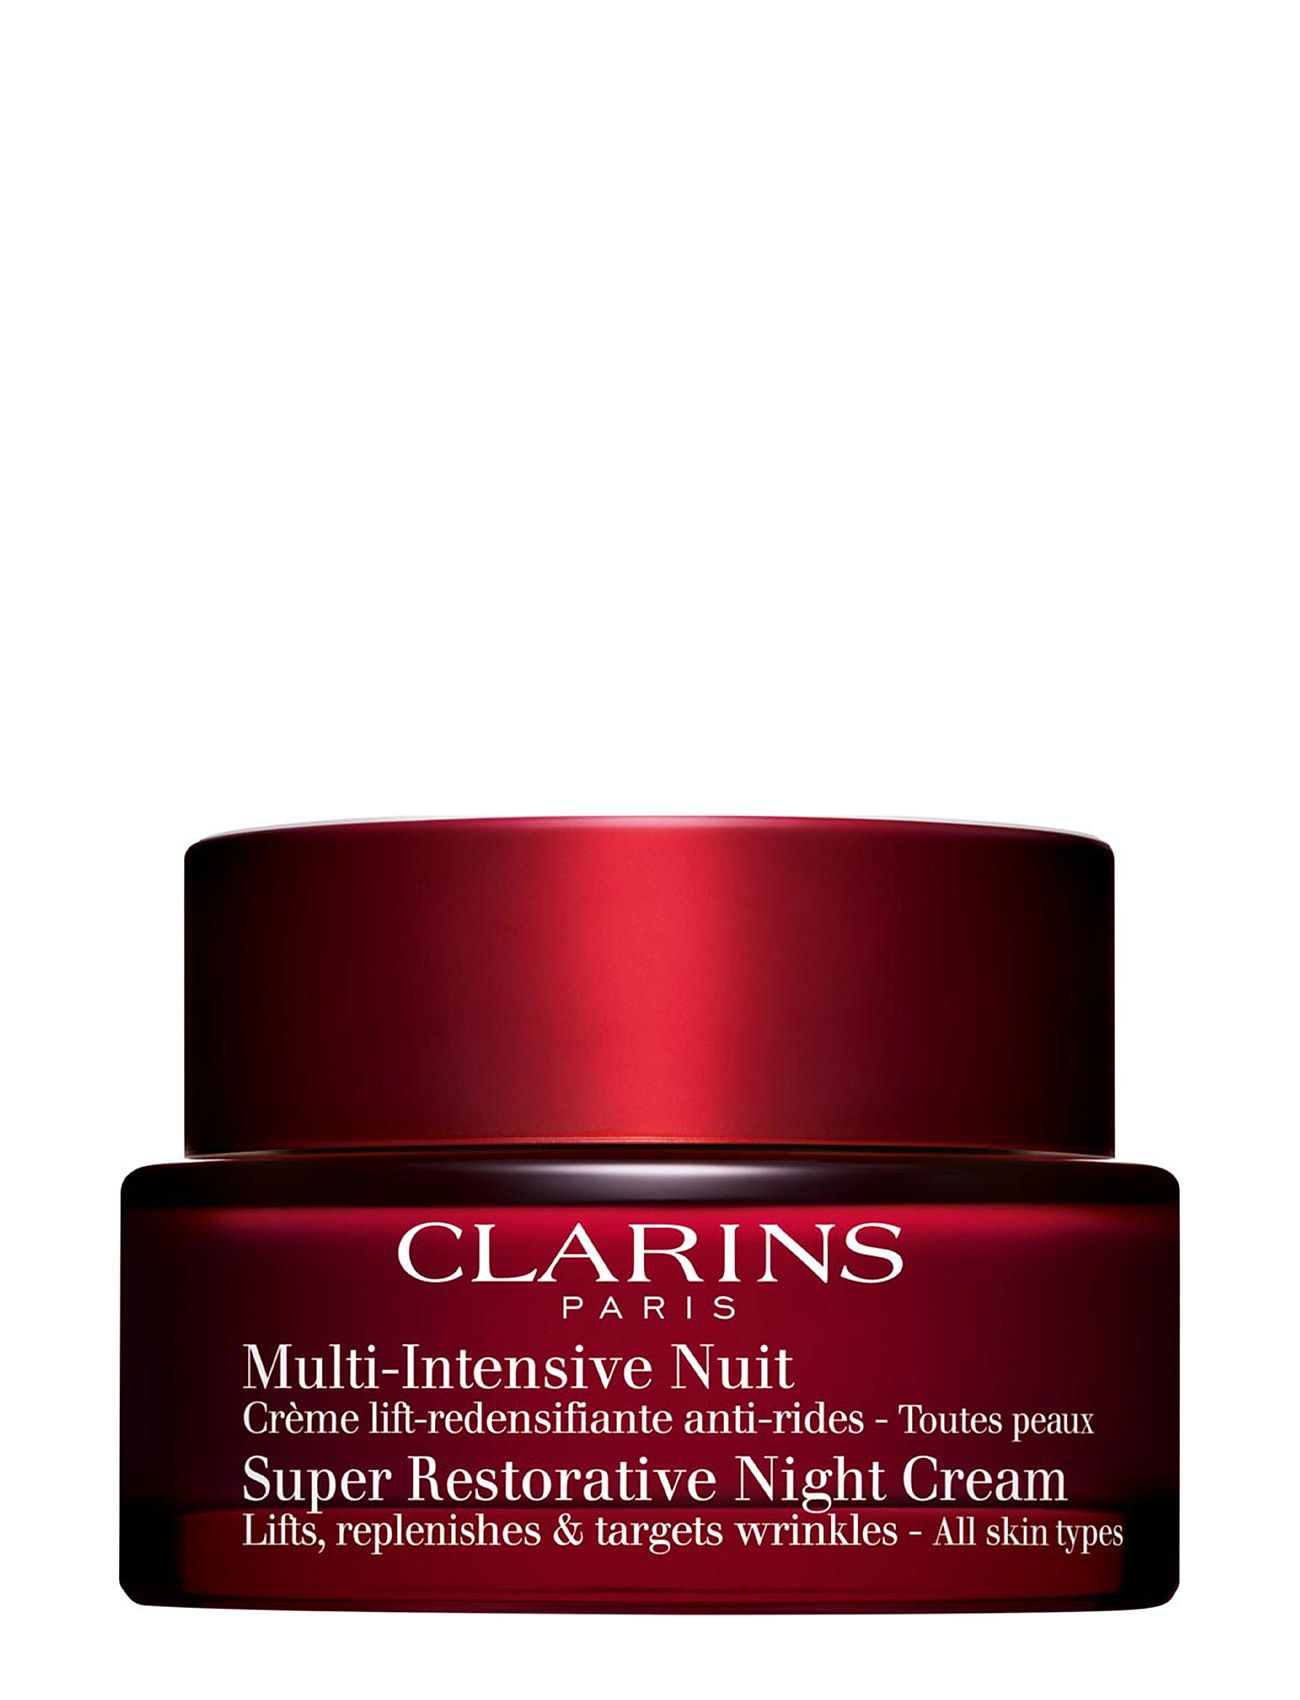 Super Restorative Night Cream All Skin Types Beauty Women Skin Care Face Moisturizers Night Cream Cream Clarins